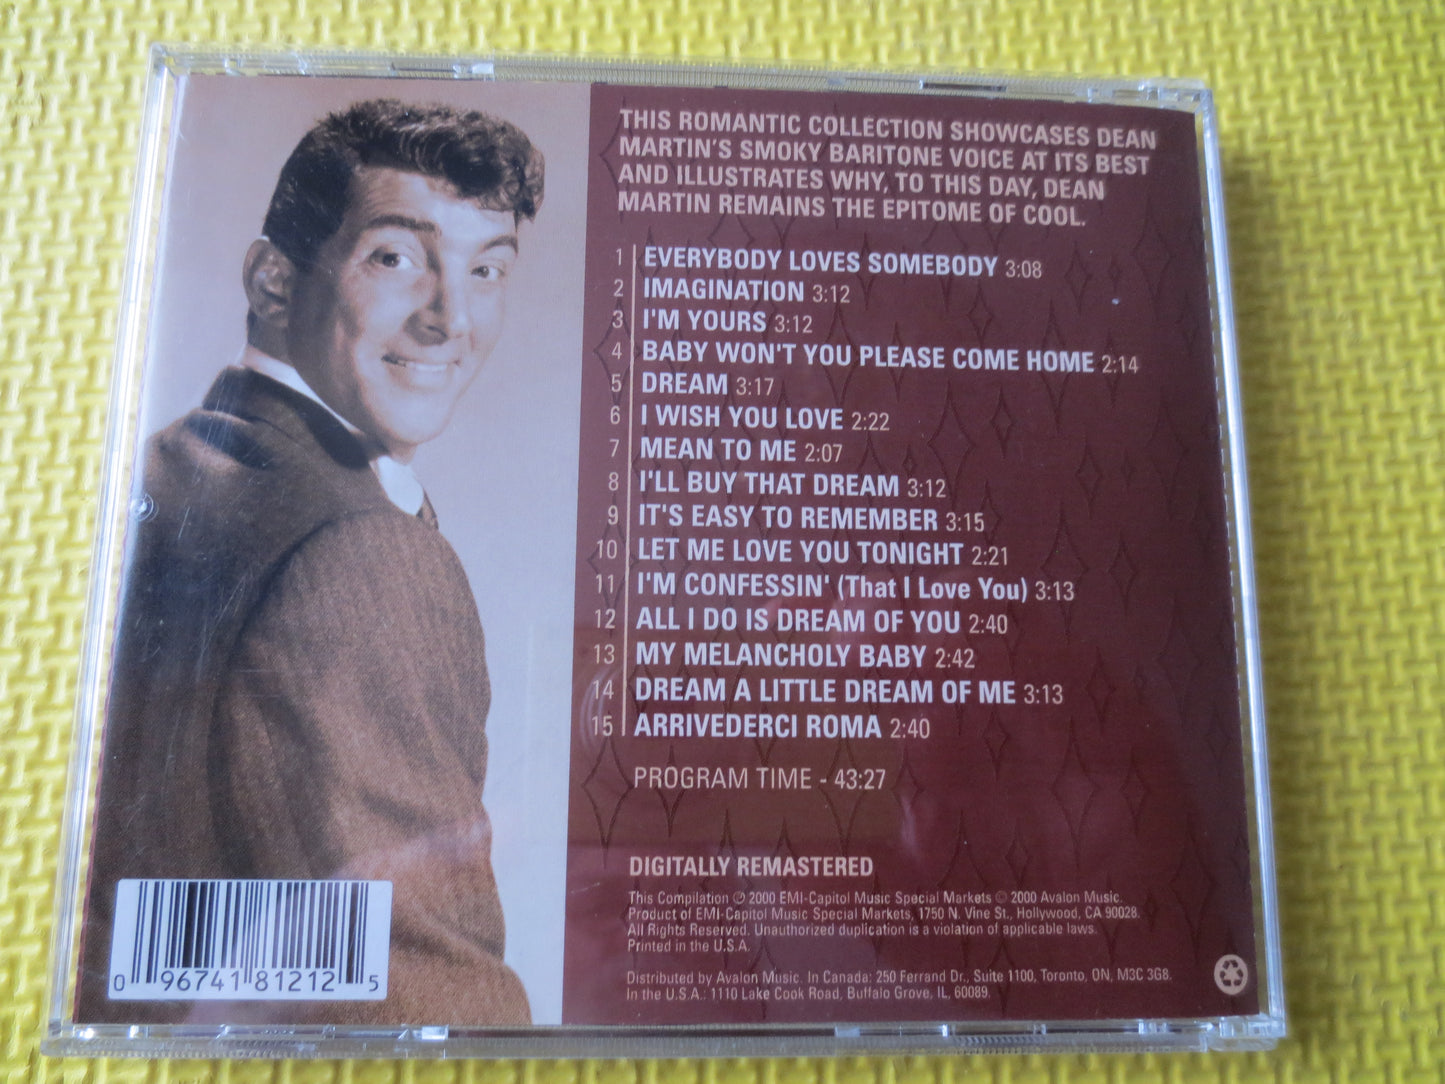 DEAN MARTIN, With LOVE From Dean, Dean Martin Cd, Dean Martin Albums, Dean Martin Music, Dean Martin Songs, 2000 Compact Discs